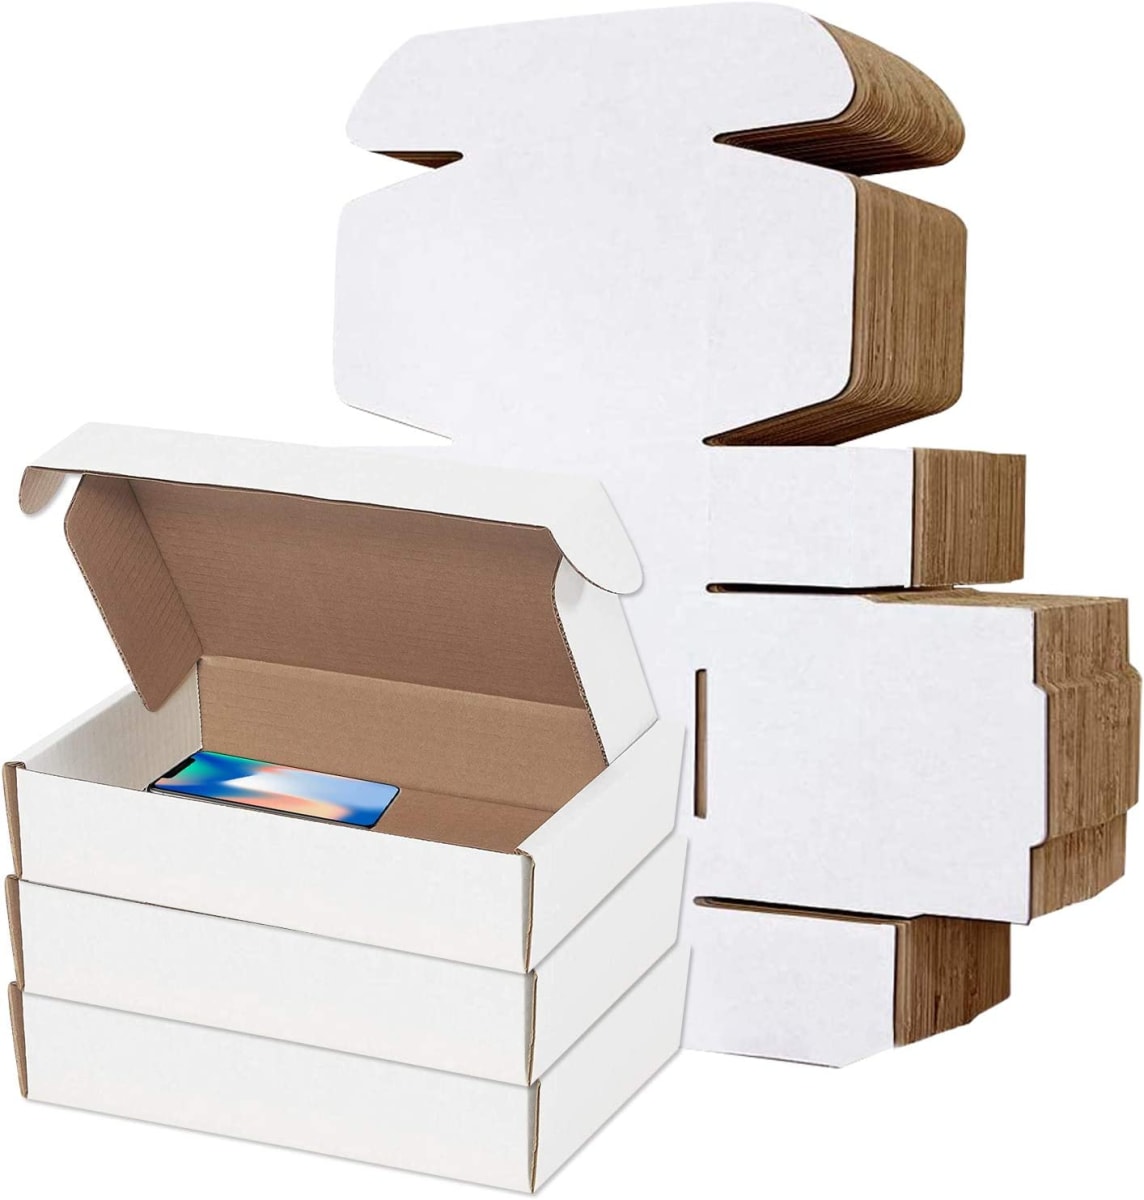 10.8x6.5x2 Inches White Package Box Hard White Corrugated Cardboard Shipping Boxs White Gift Wrap Box